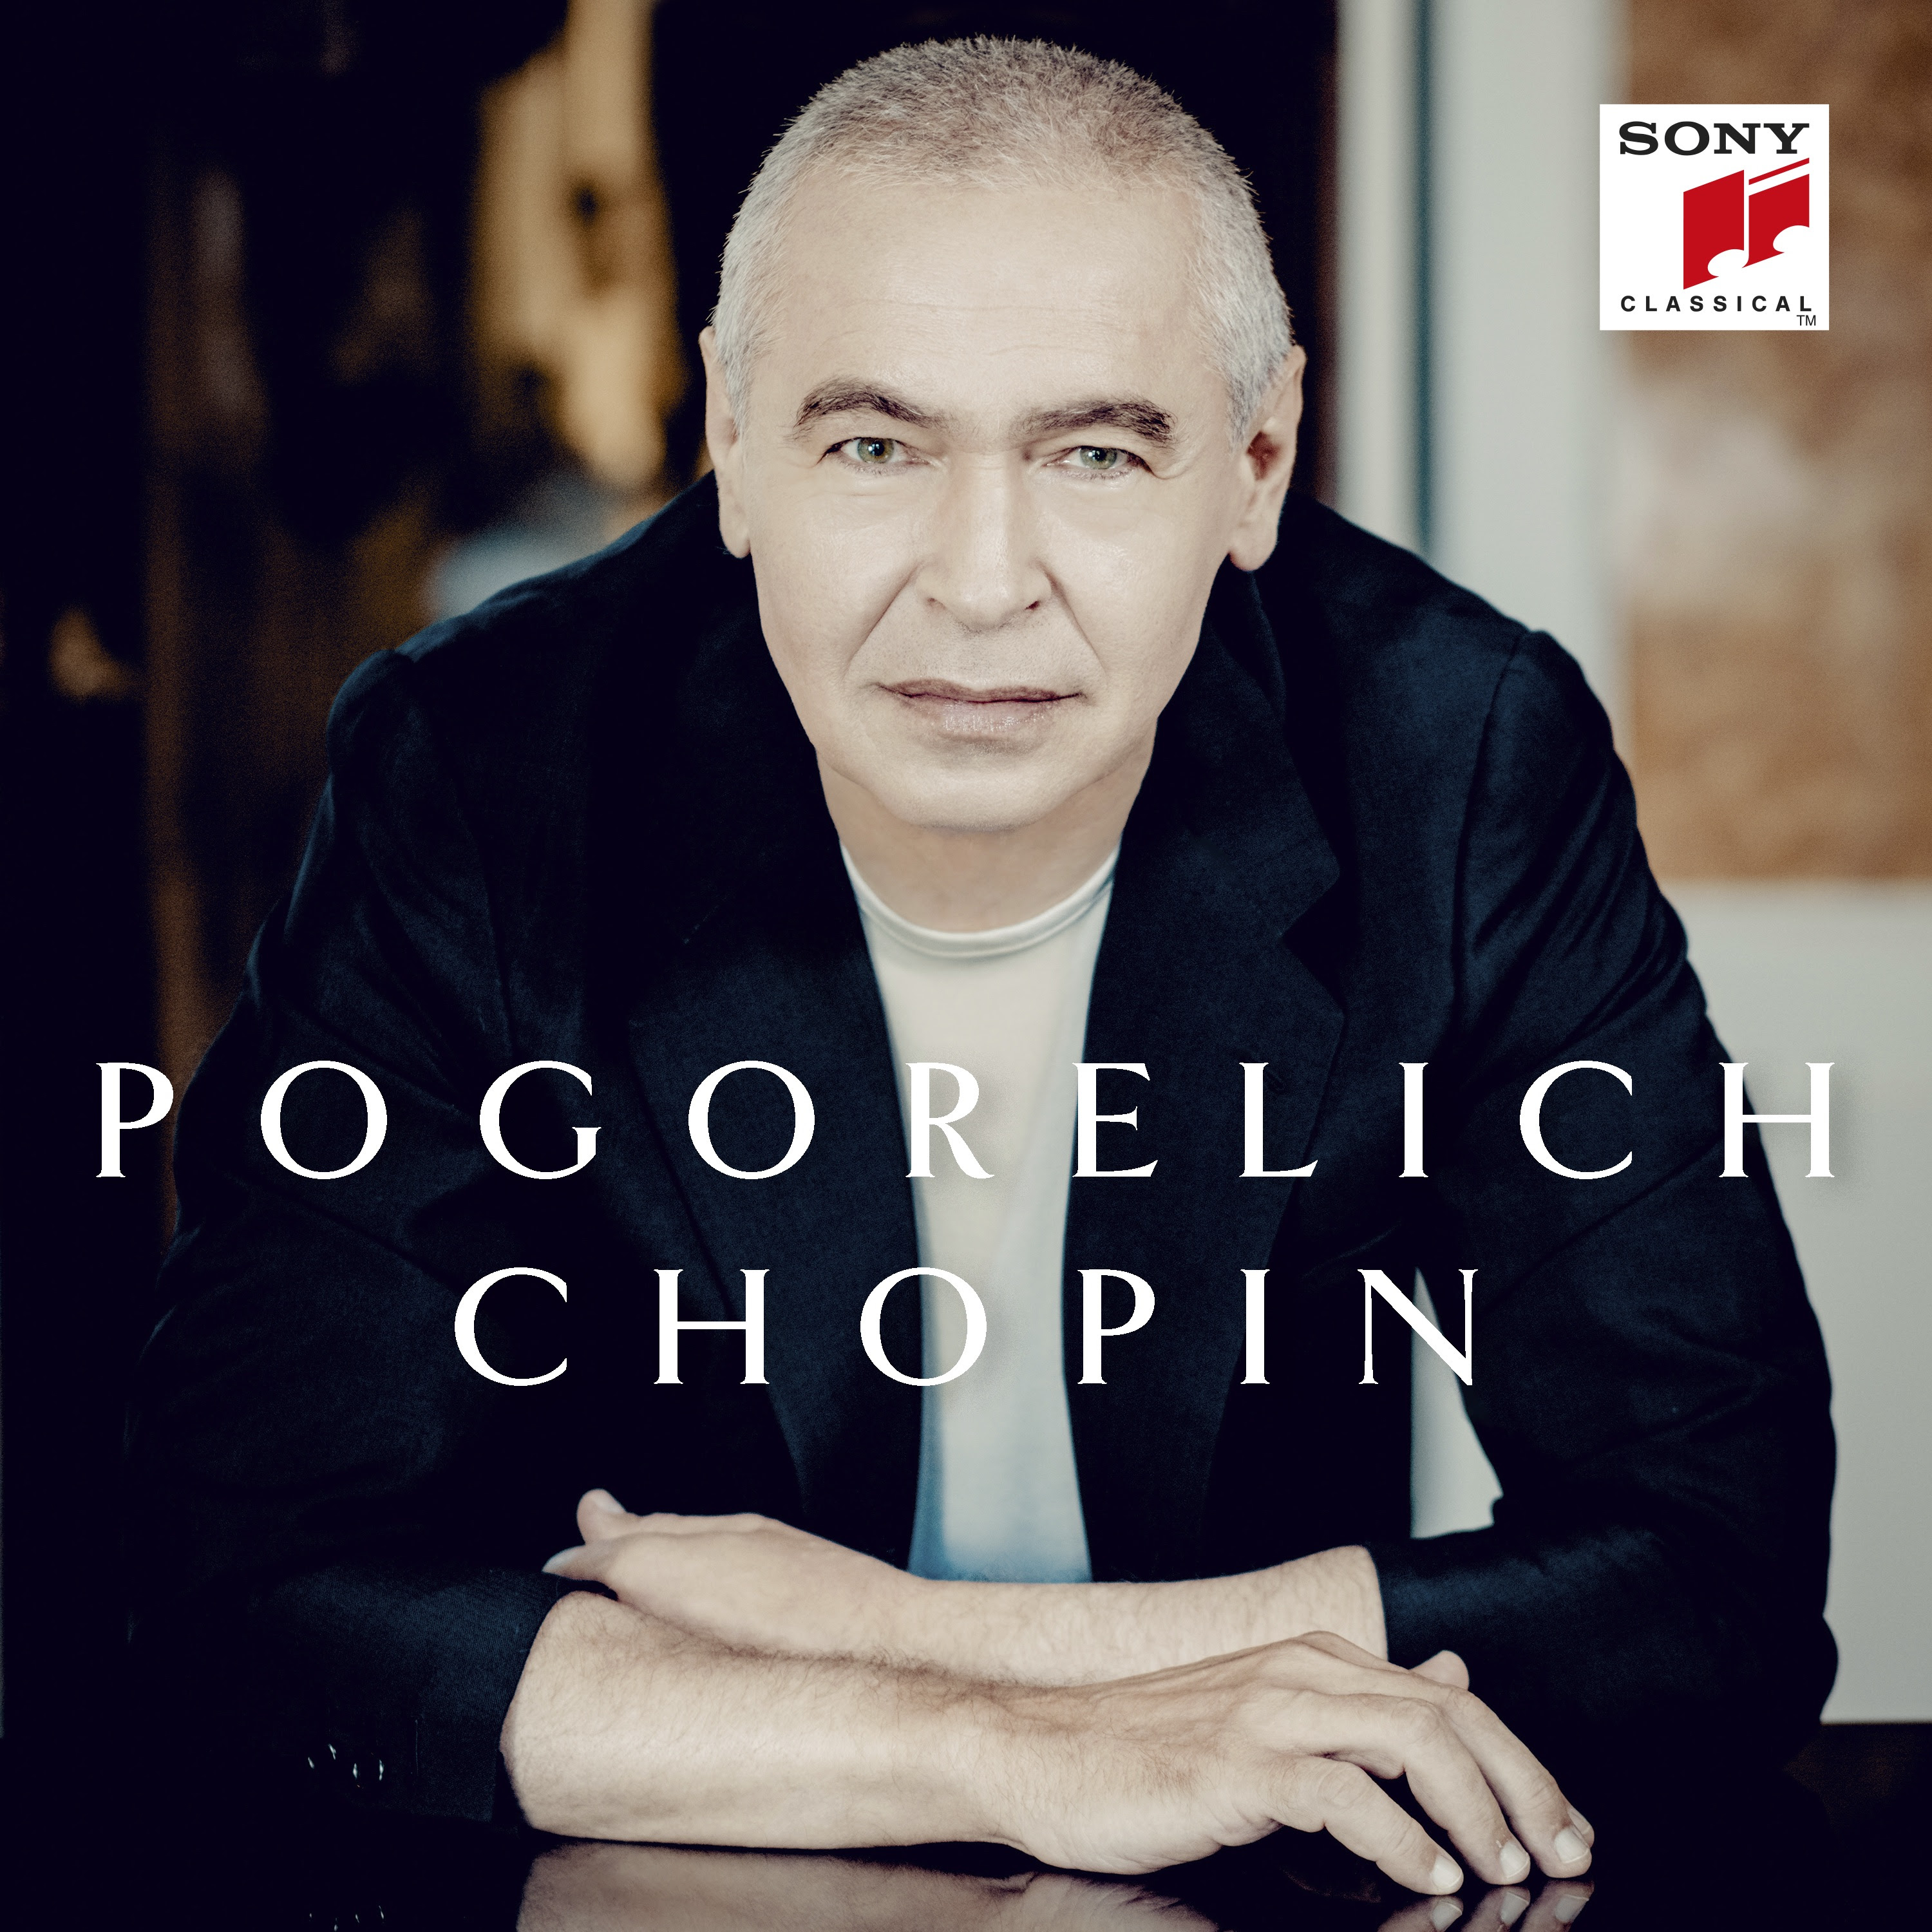 SONY_Pogorelich_Chopin_FRONT_3000 copy 4.04.02 PM copy 2.jpg